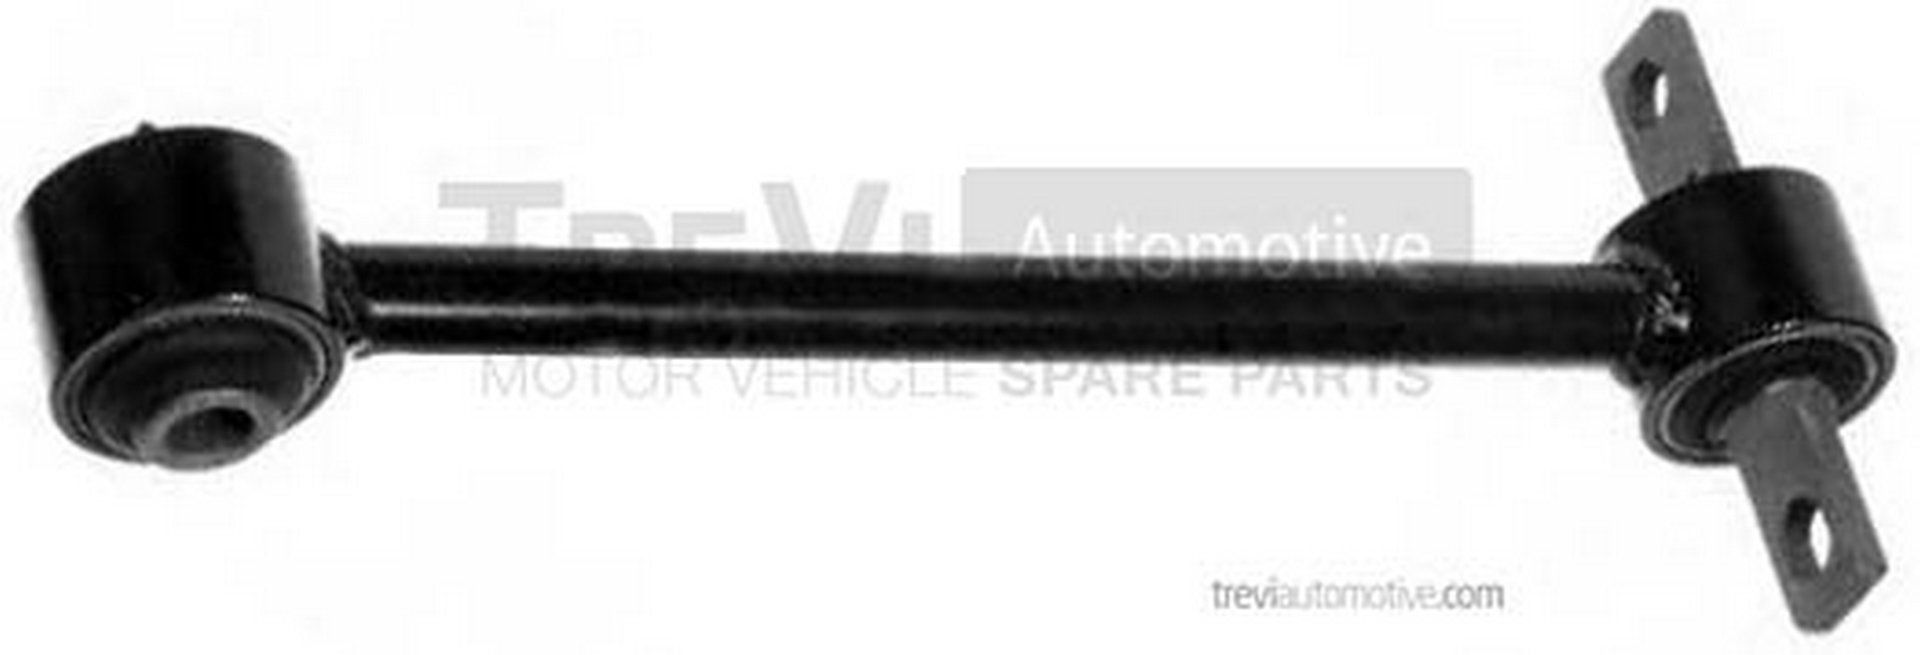 TREVI AUTOMOTIVE TRTT5561